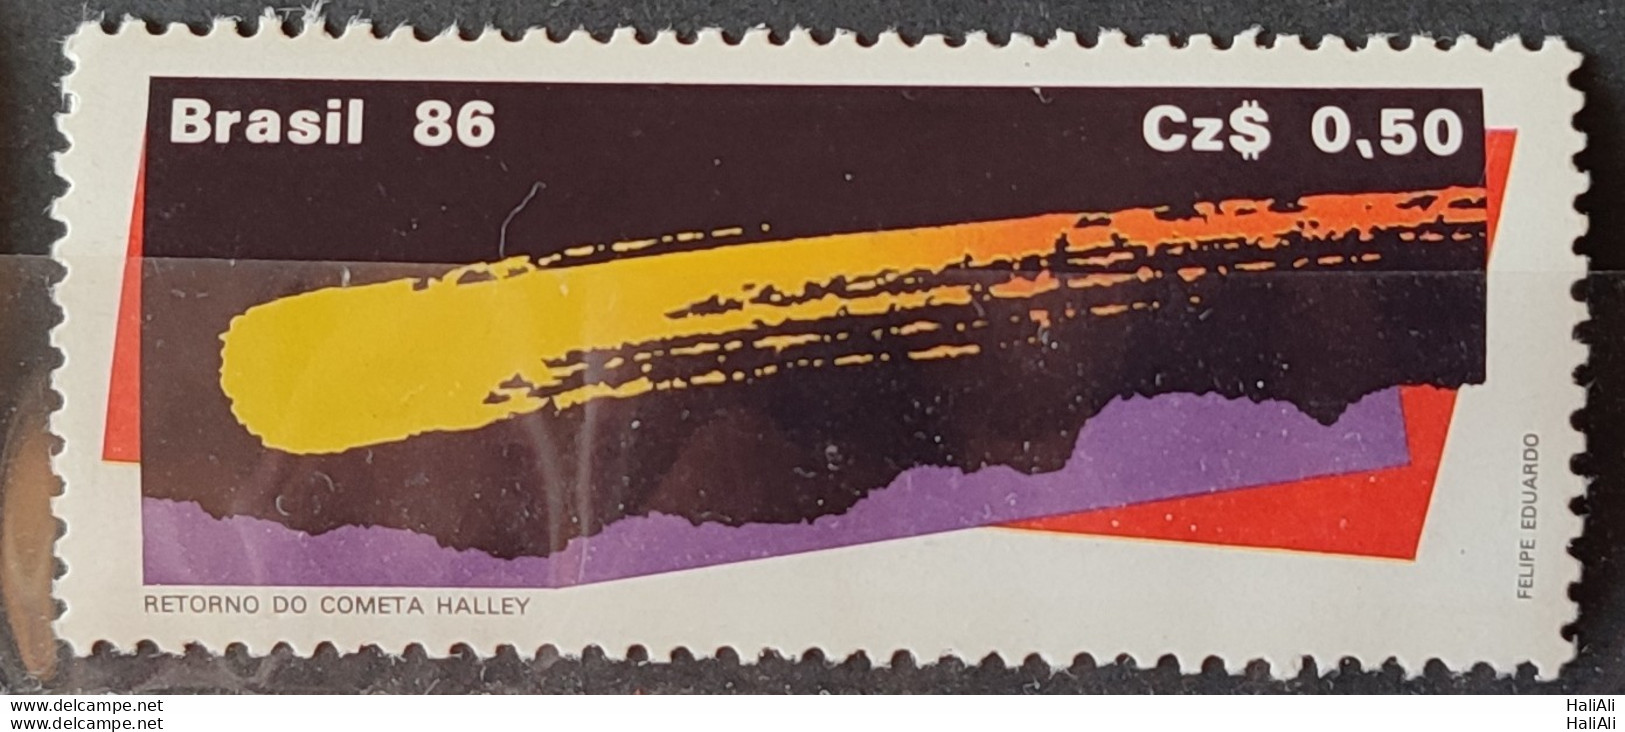 C 1507 Brazil Stamp Comet Halley Astronomy 1986.jpg - Neufs